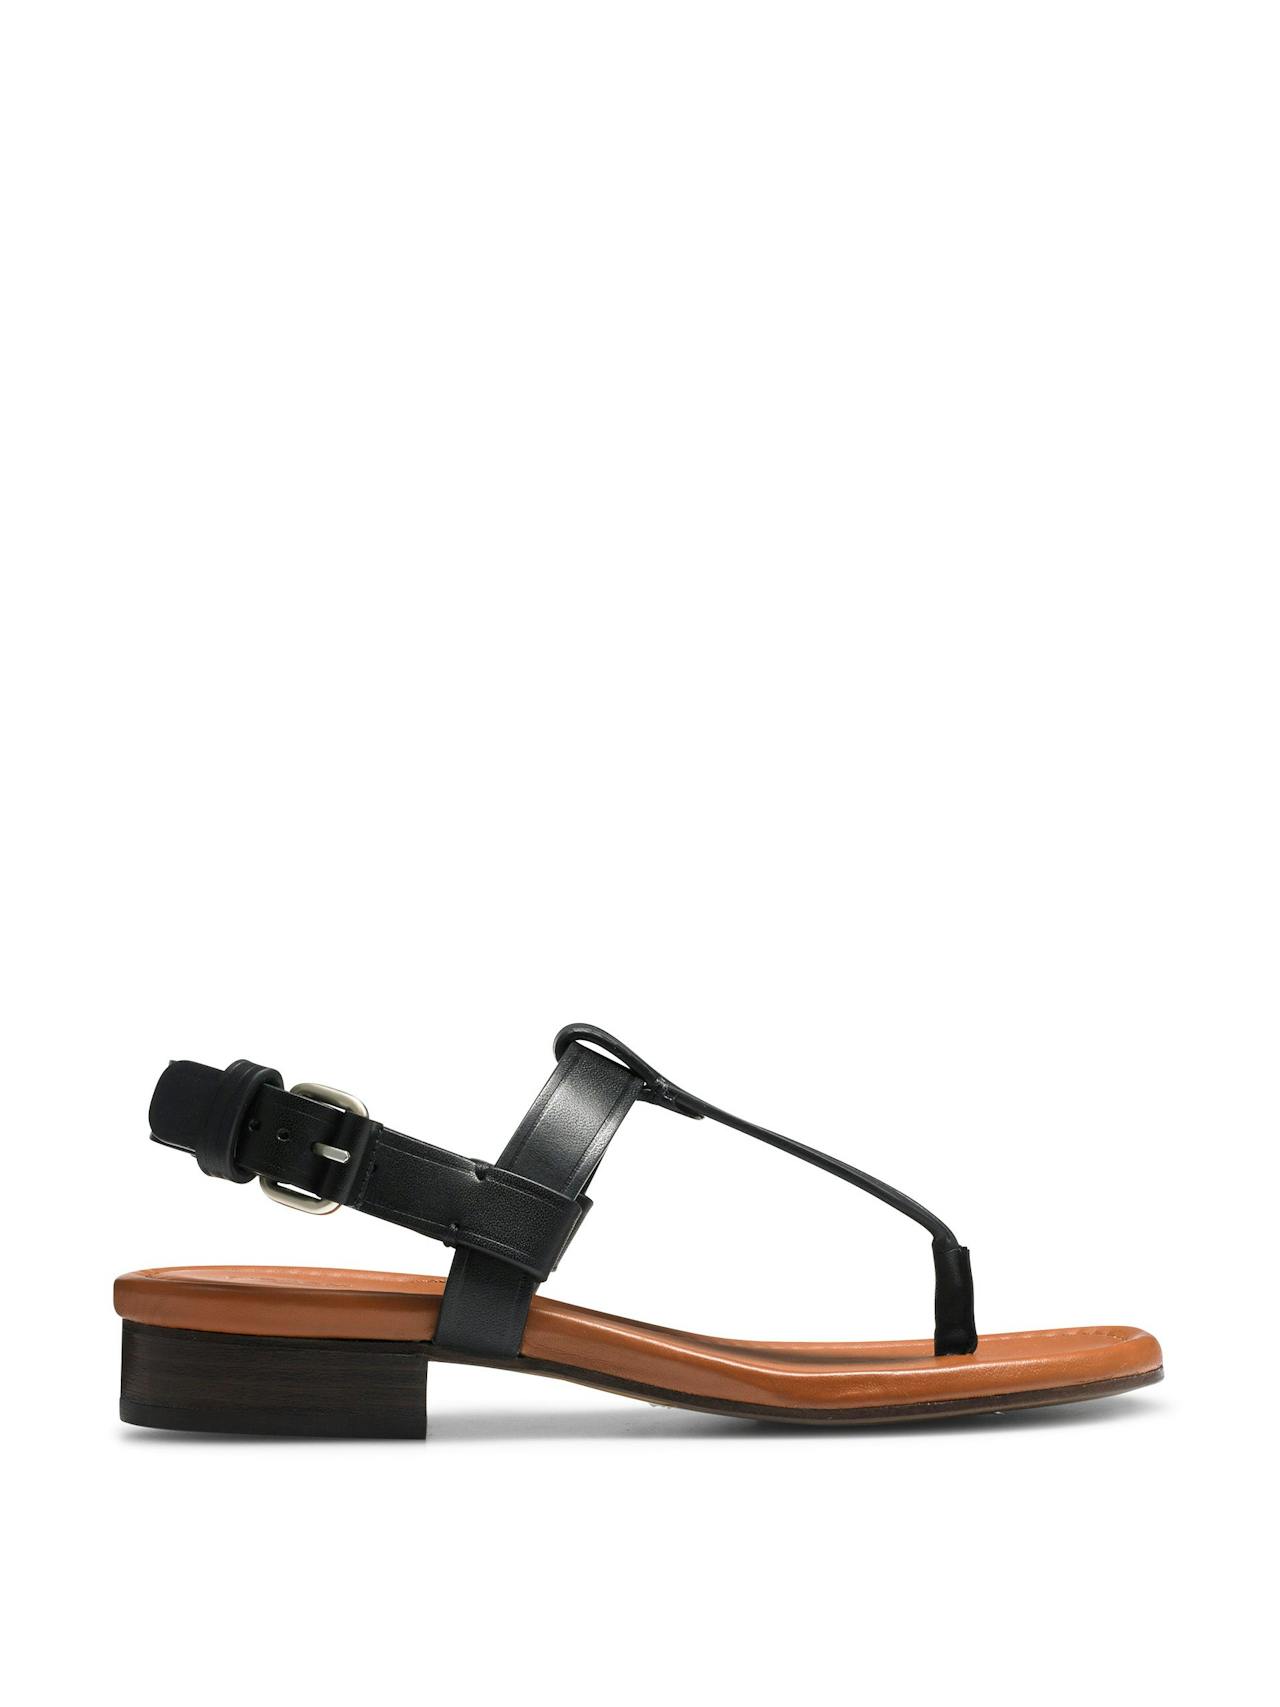 T-bar sandal